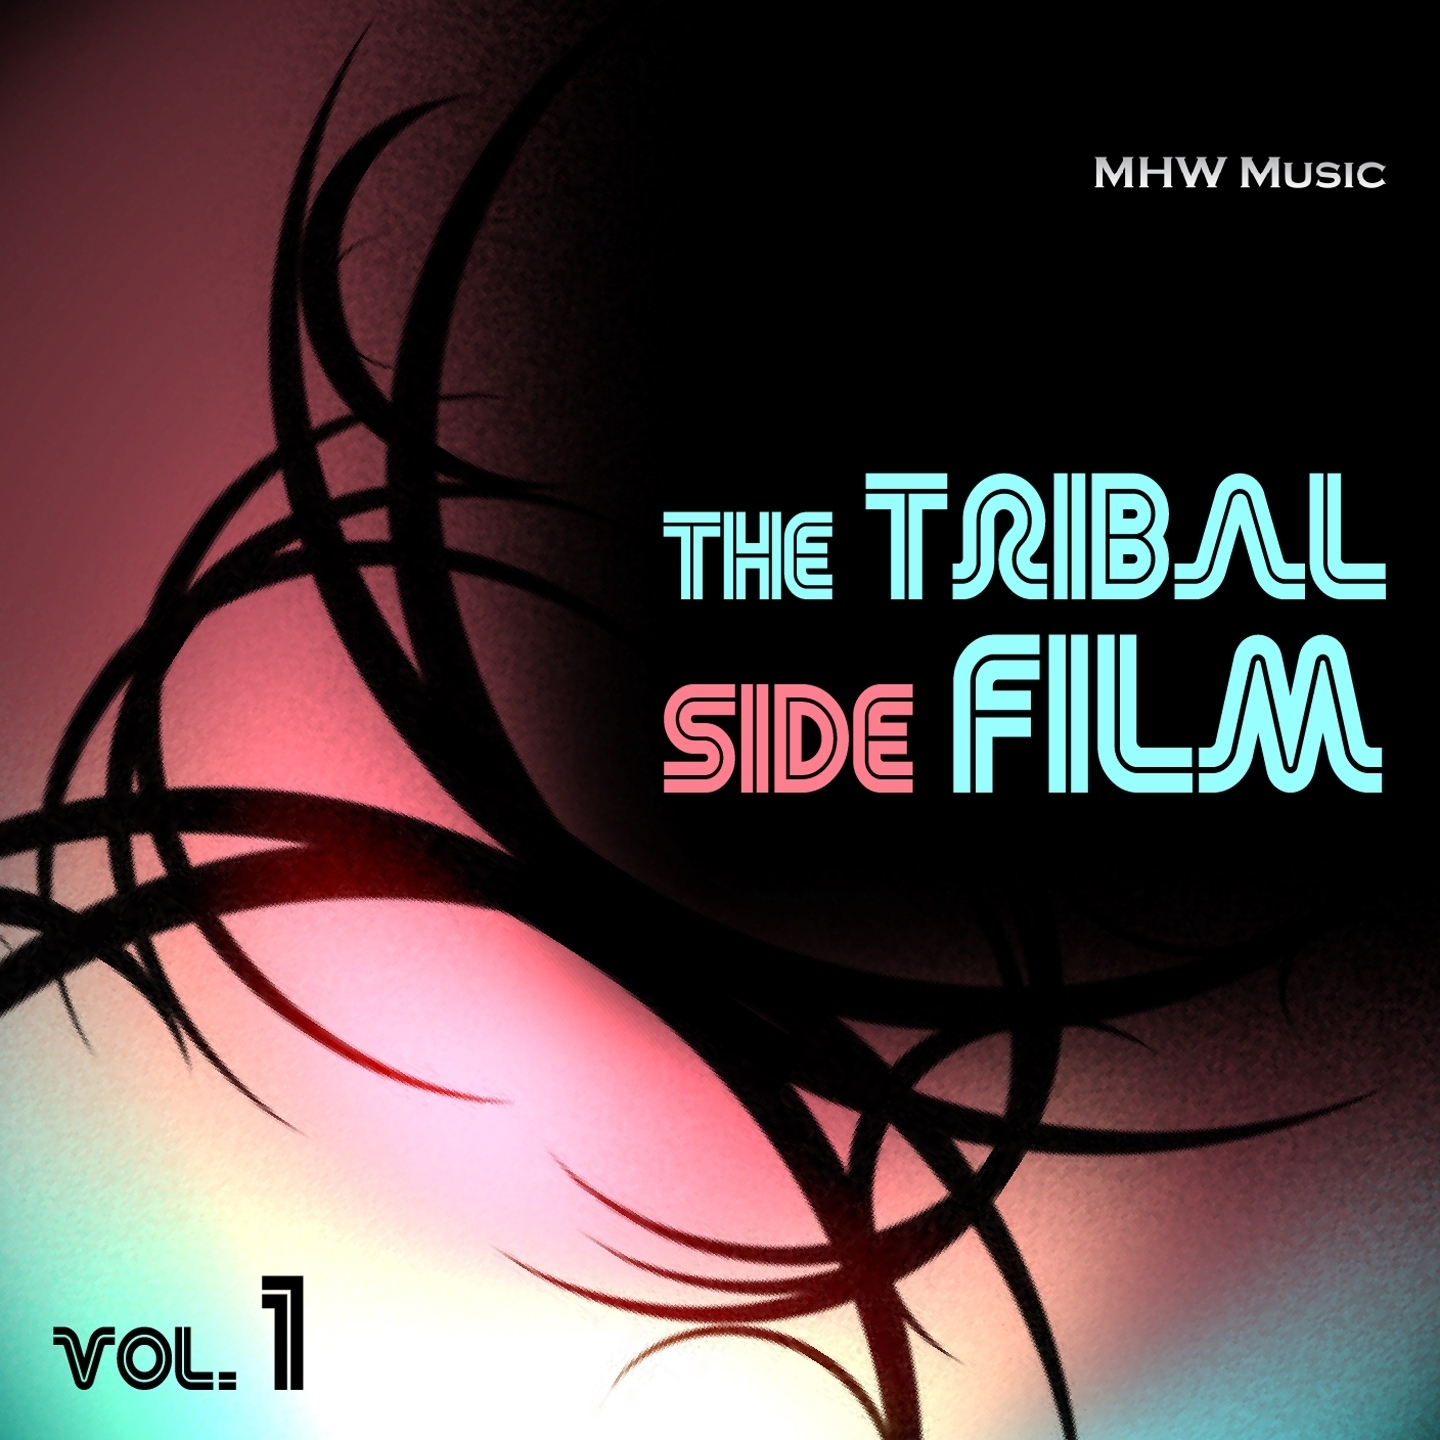 The Tribal Side Film, Vol. 1